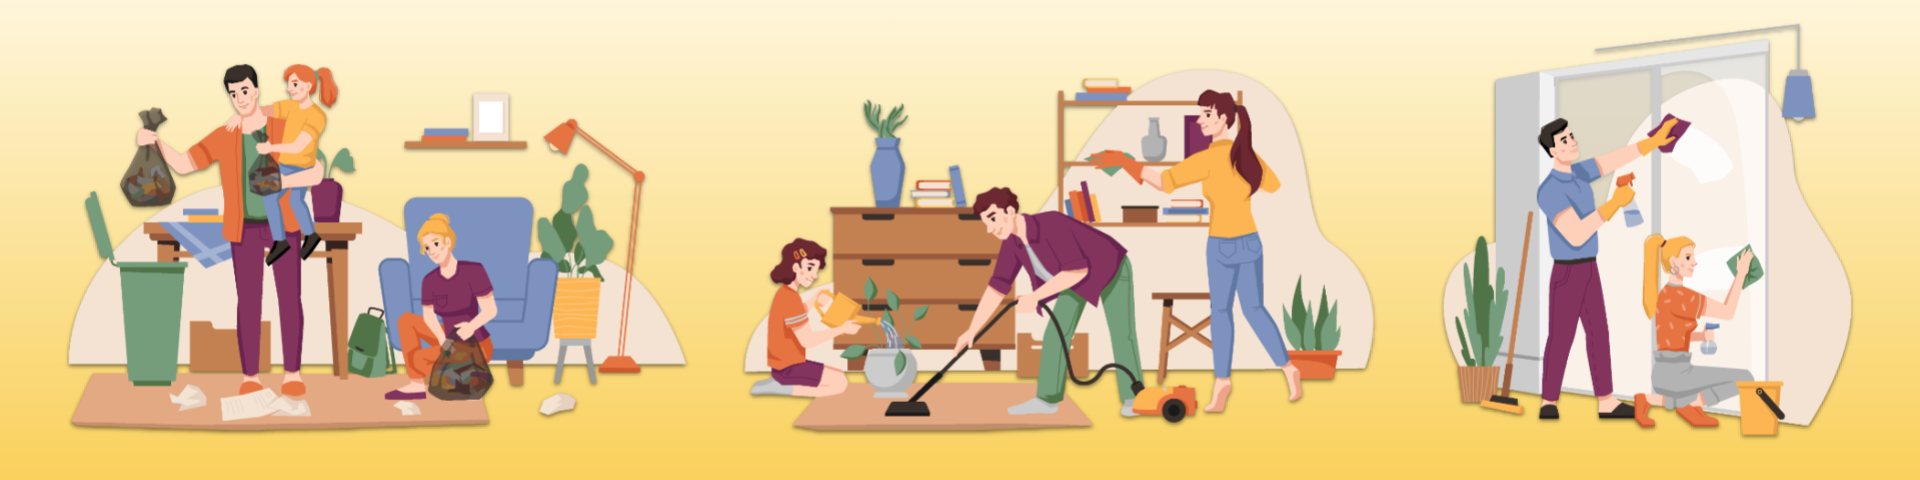 HeroMode can make household chores fun!